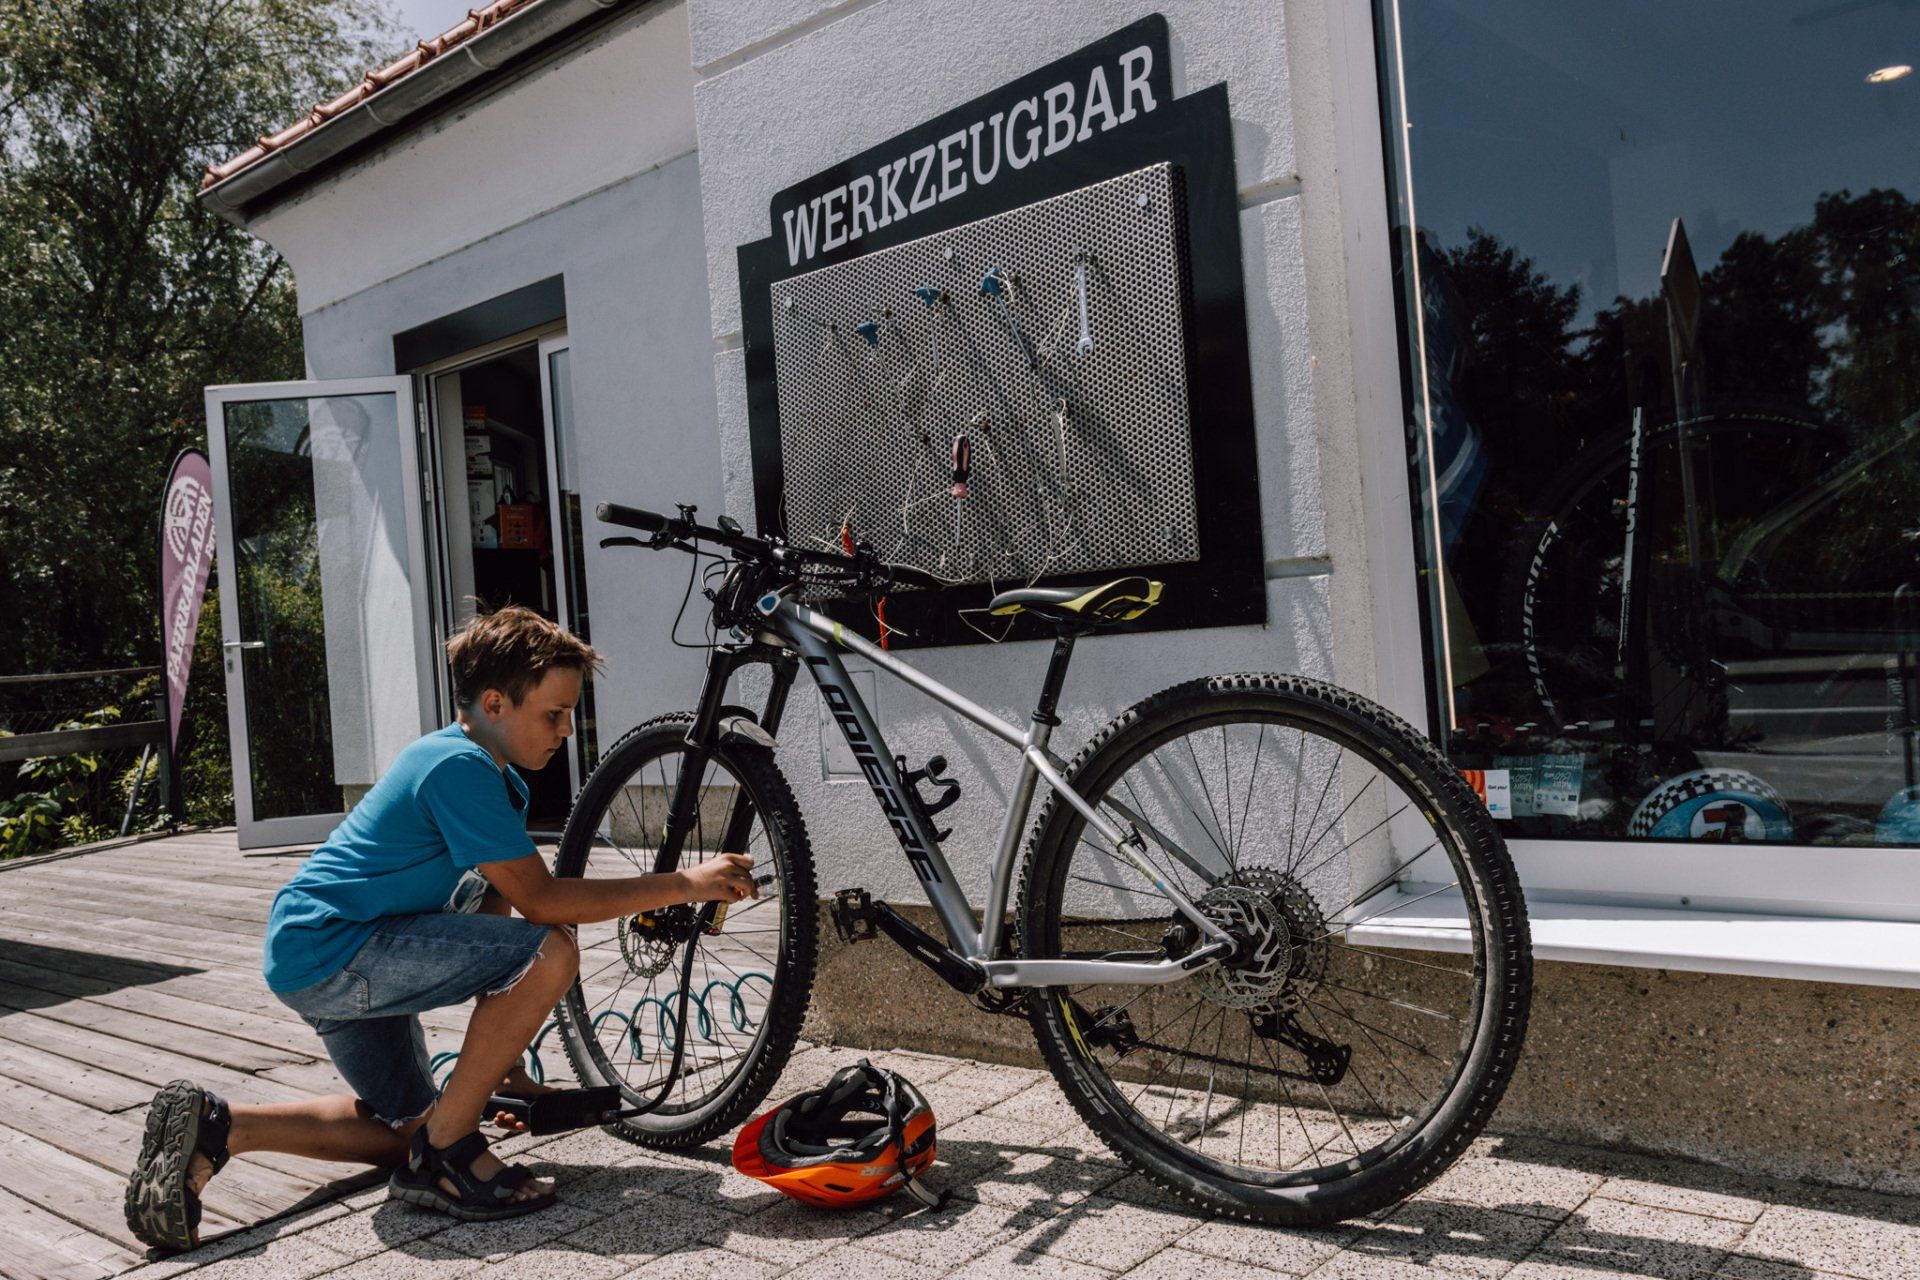 Fahrradladen Fernitz, Werkzeugbar